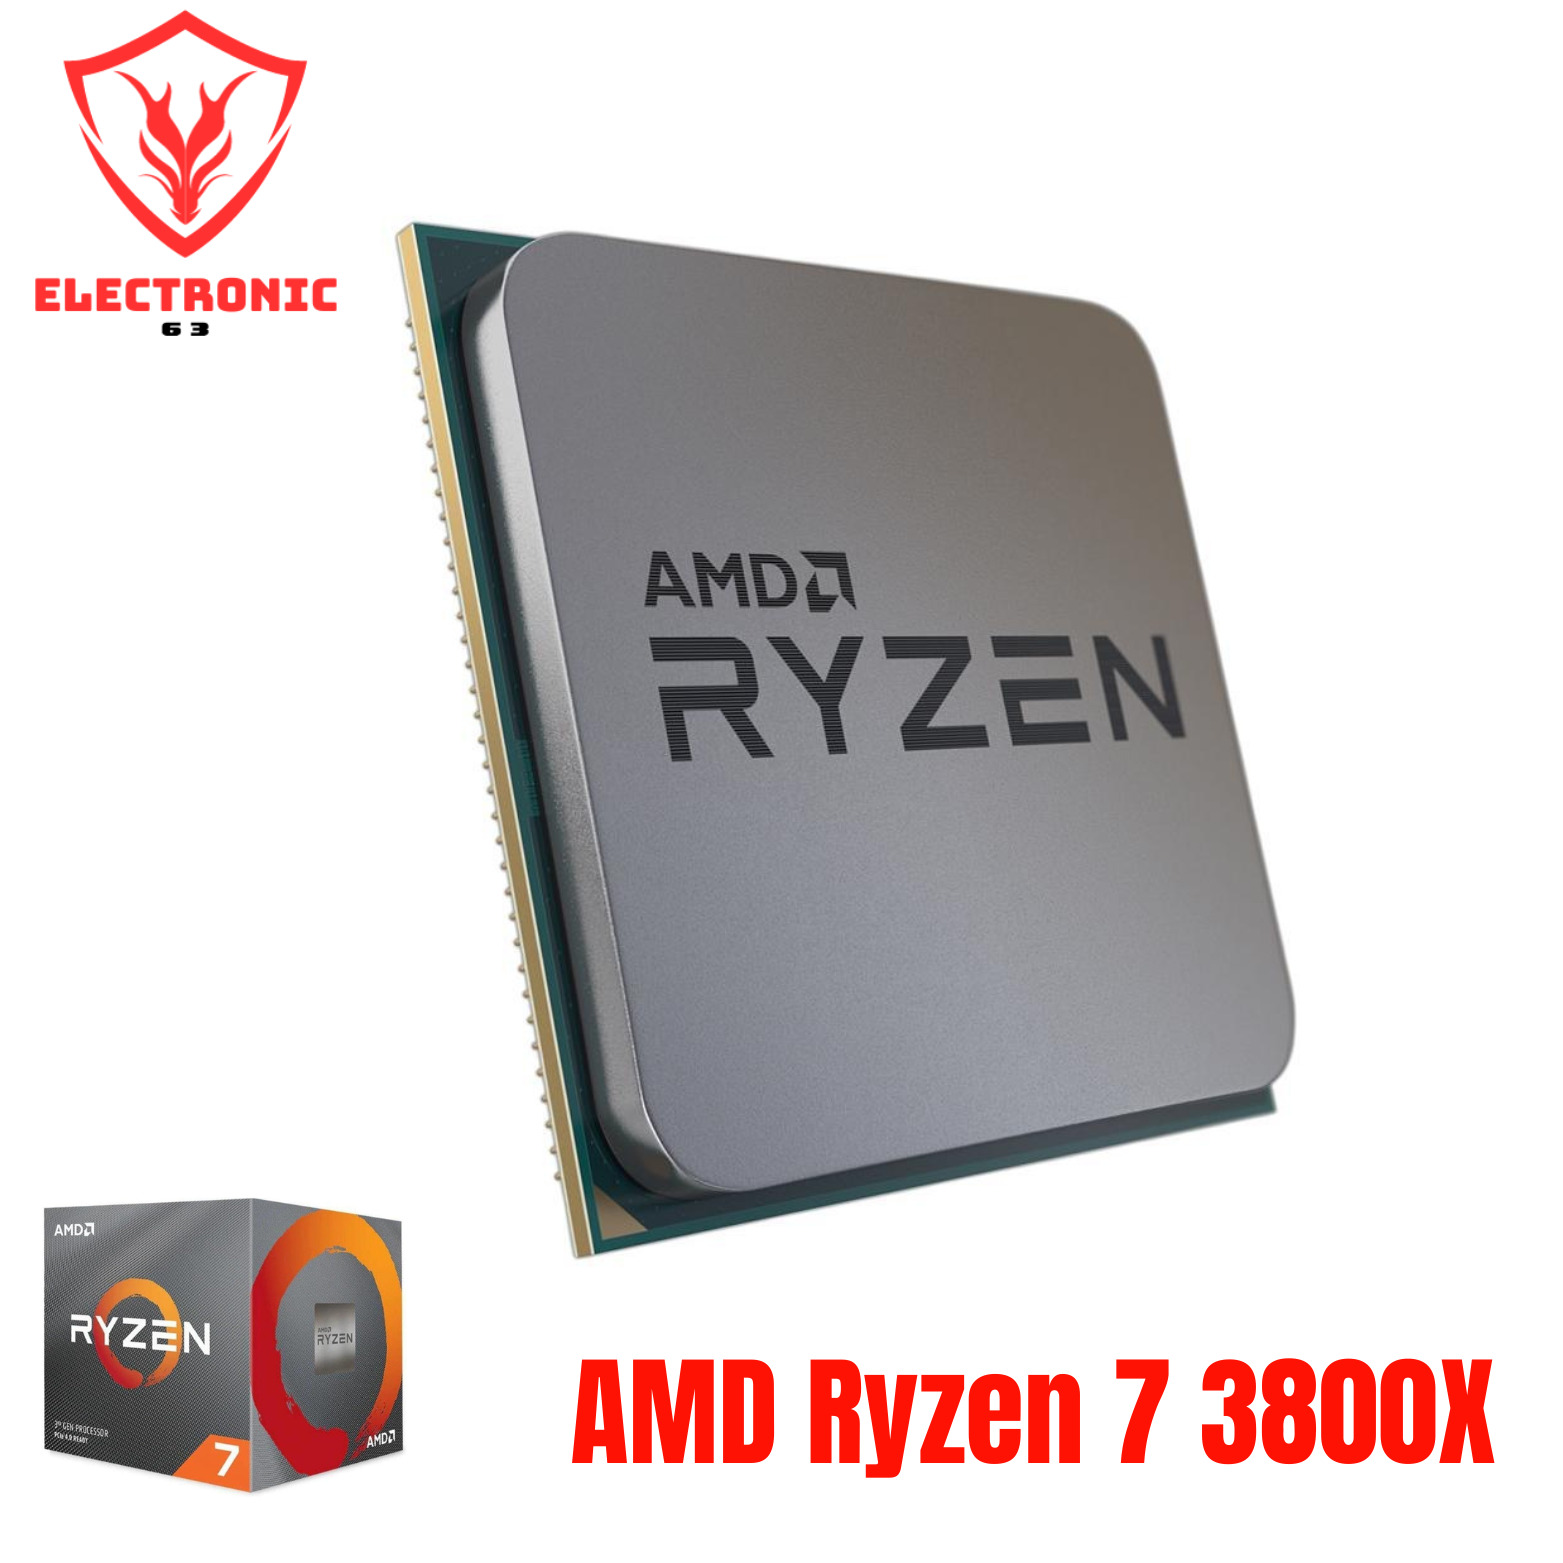 AMD Ryzen 7 3800X 3.9GHz 32MB Cache 8Core 16Thr 105W AM4 socket CPU Processor